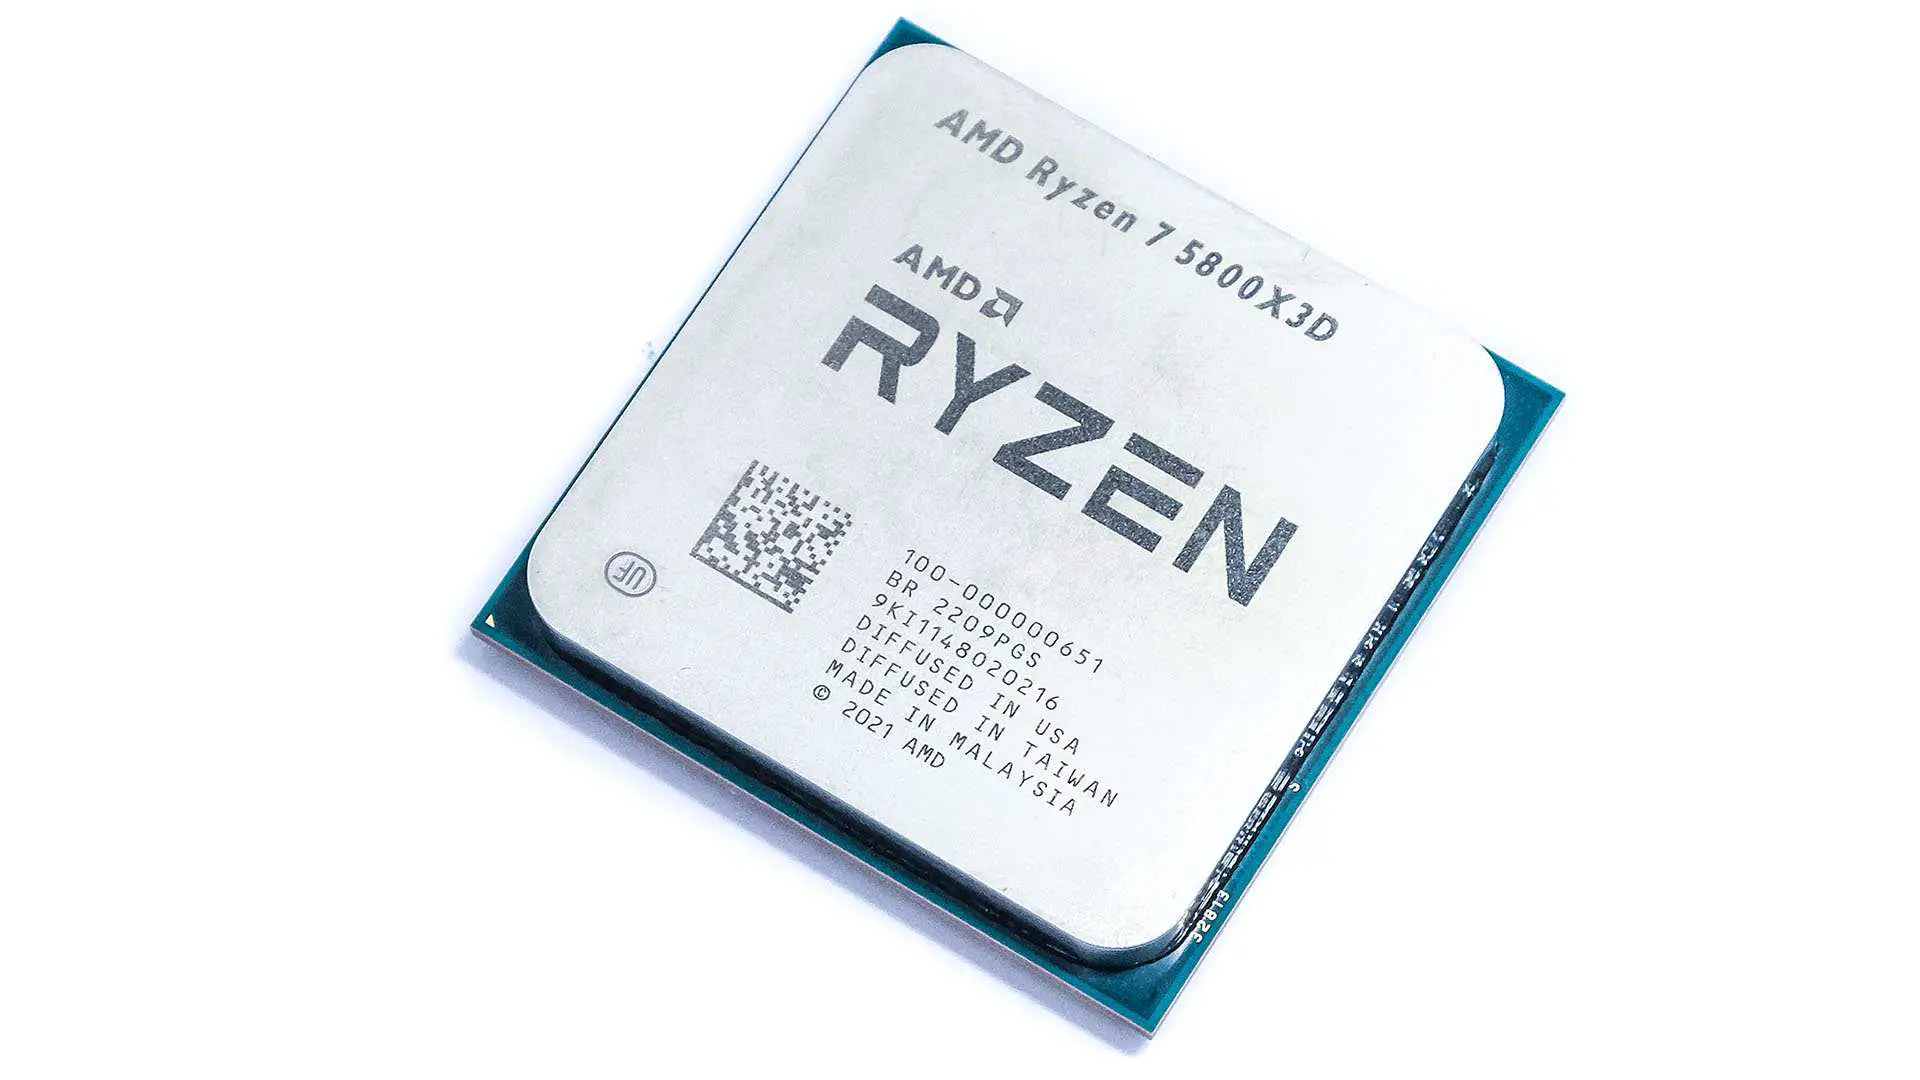 AMD Ryzen 7 5800X3D 4